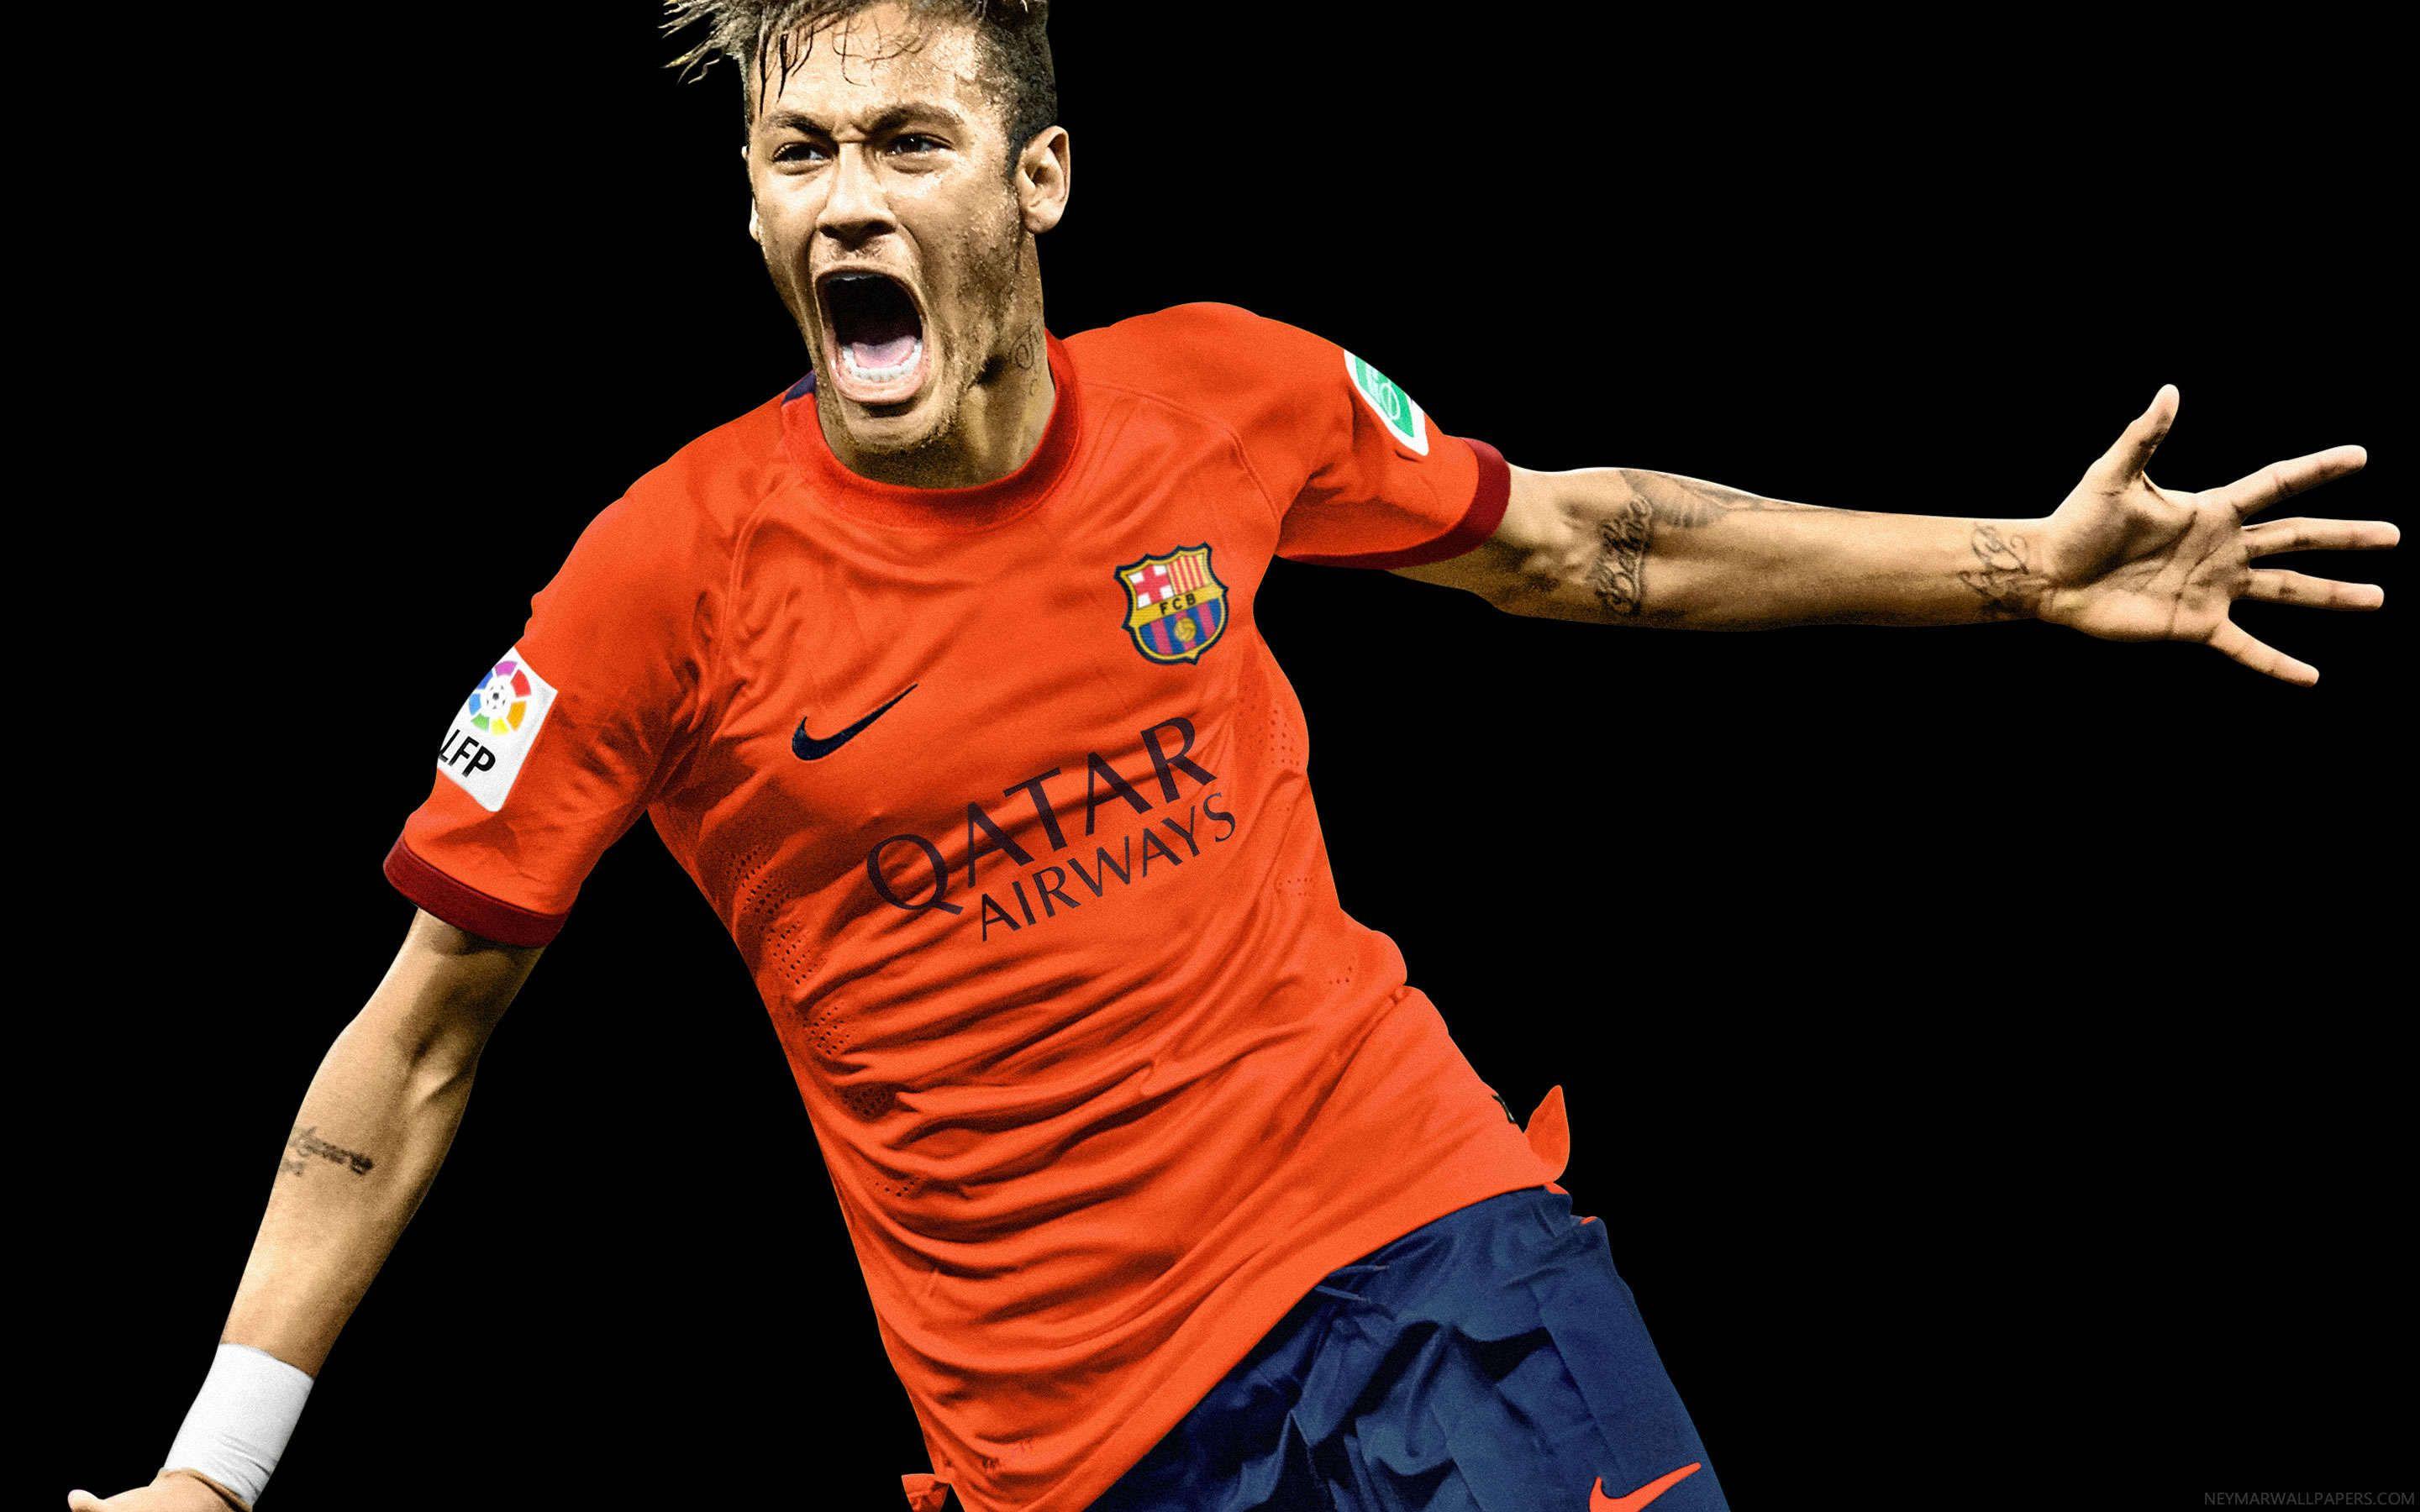 Neymar 2016 Wallpaper HD Wallpaper Background of Your Choice